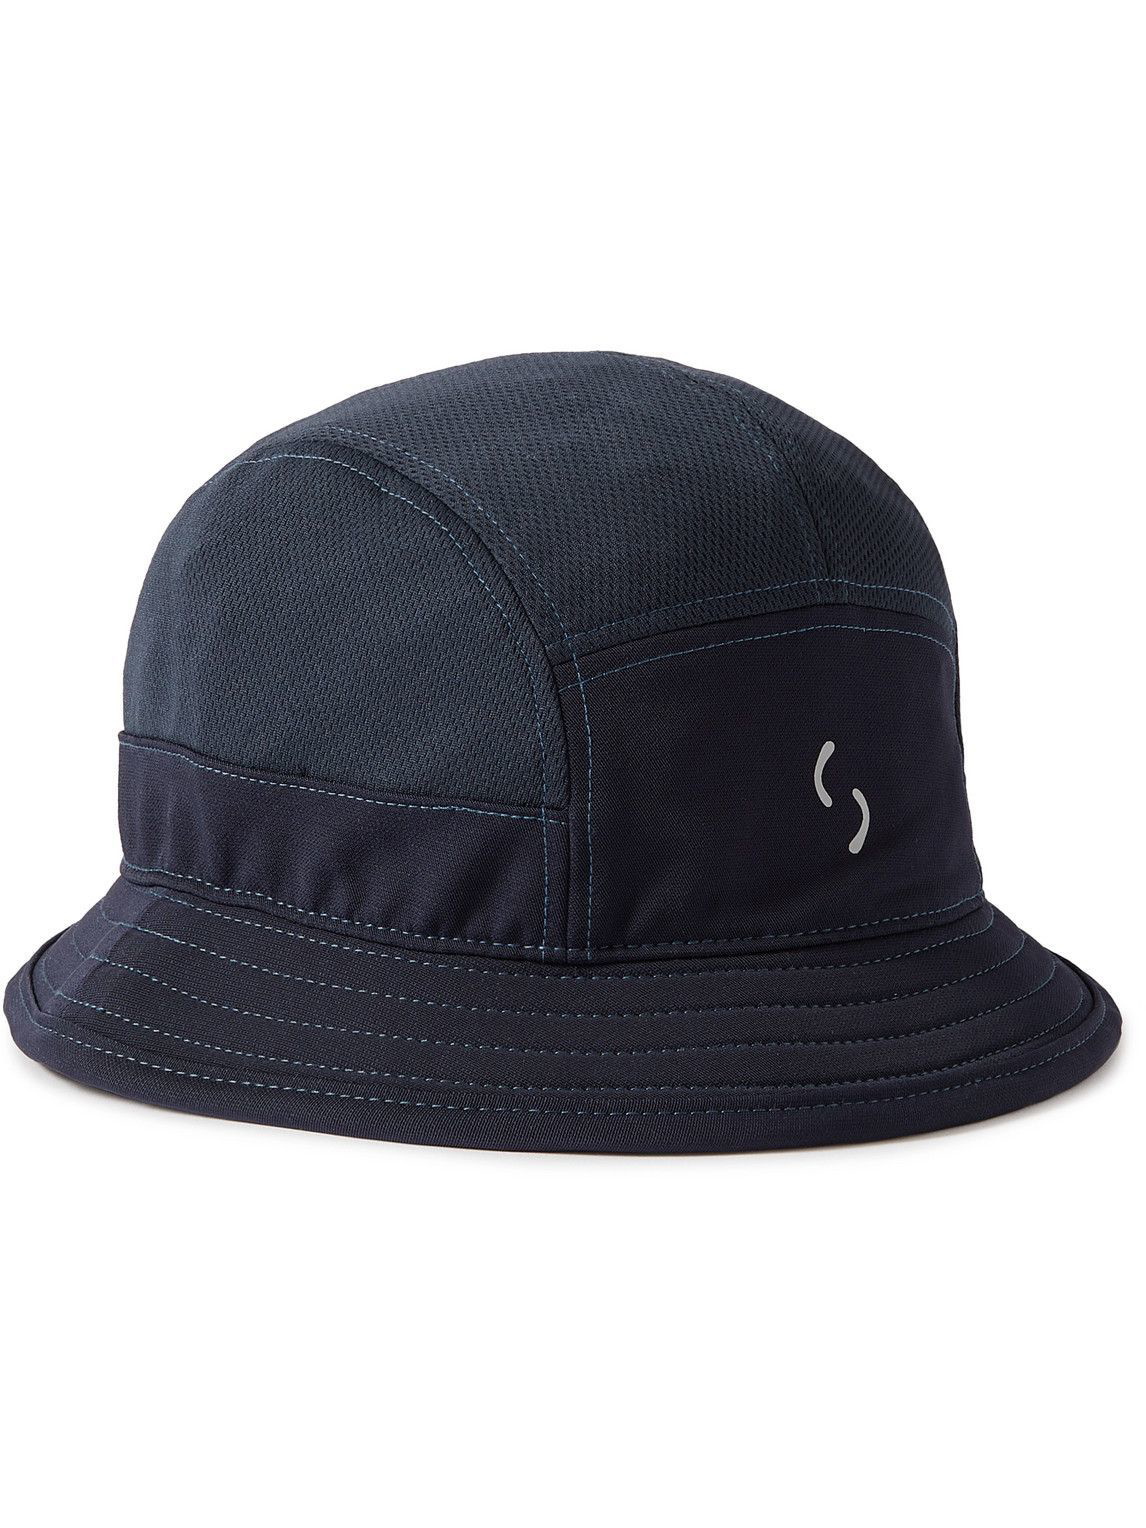 MLB Like LA Embroidery Bucket Hat Black – Youthgenes Market